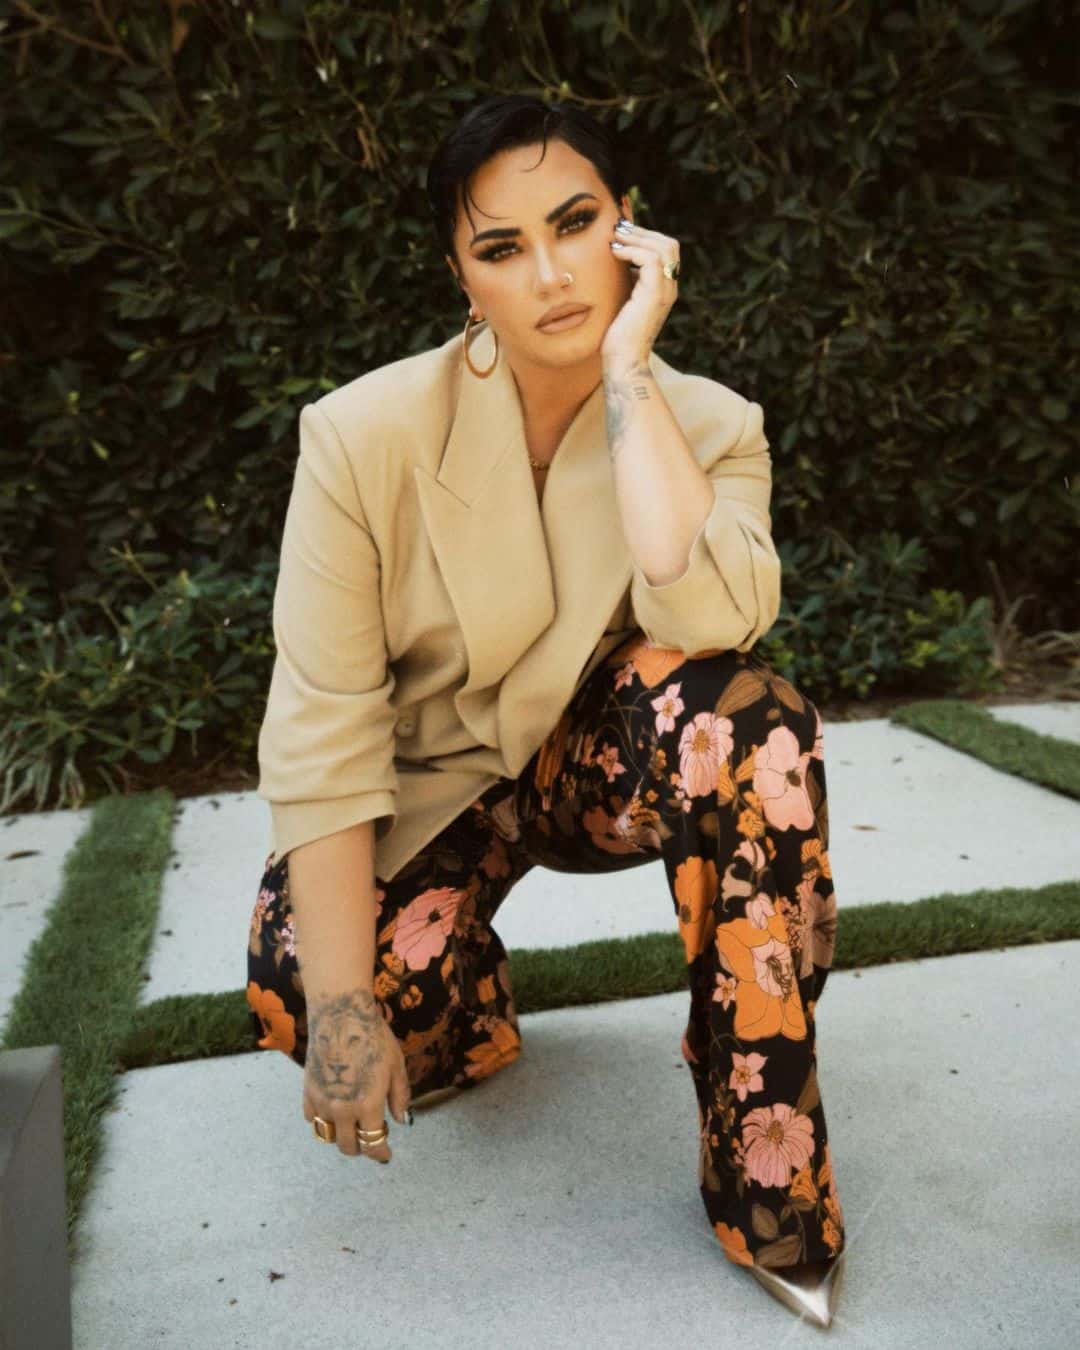 Biodata, Profil, dan Fakta Demi Lovato